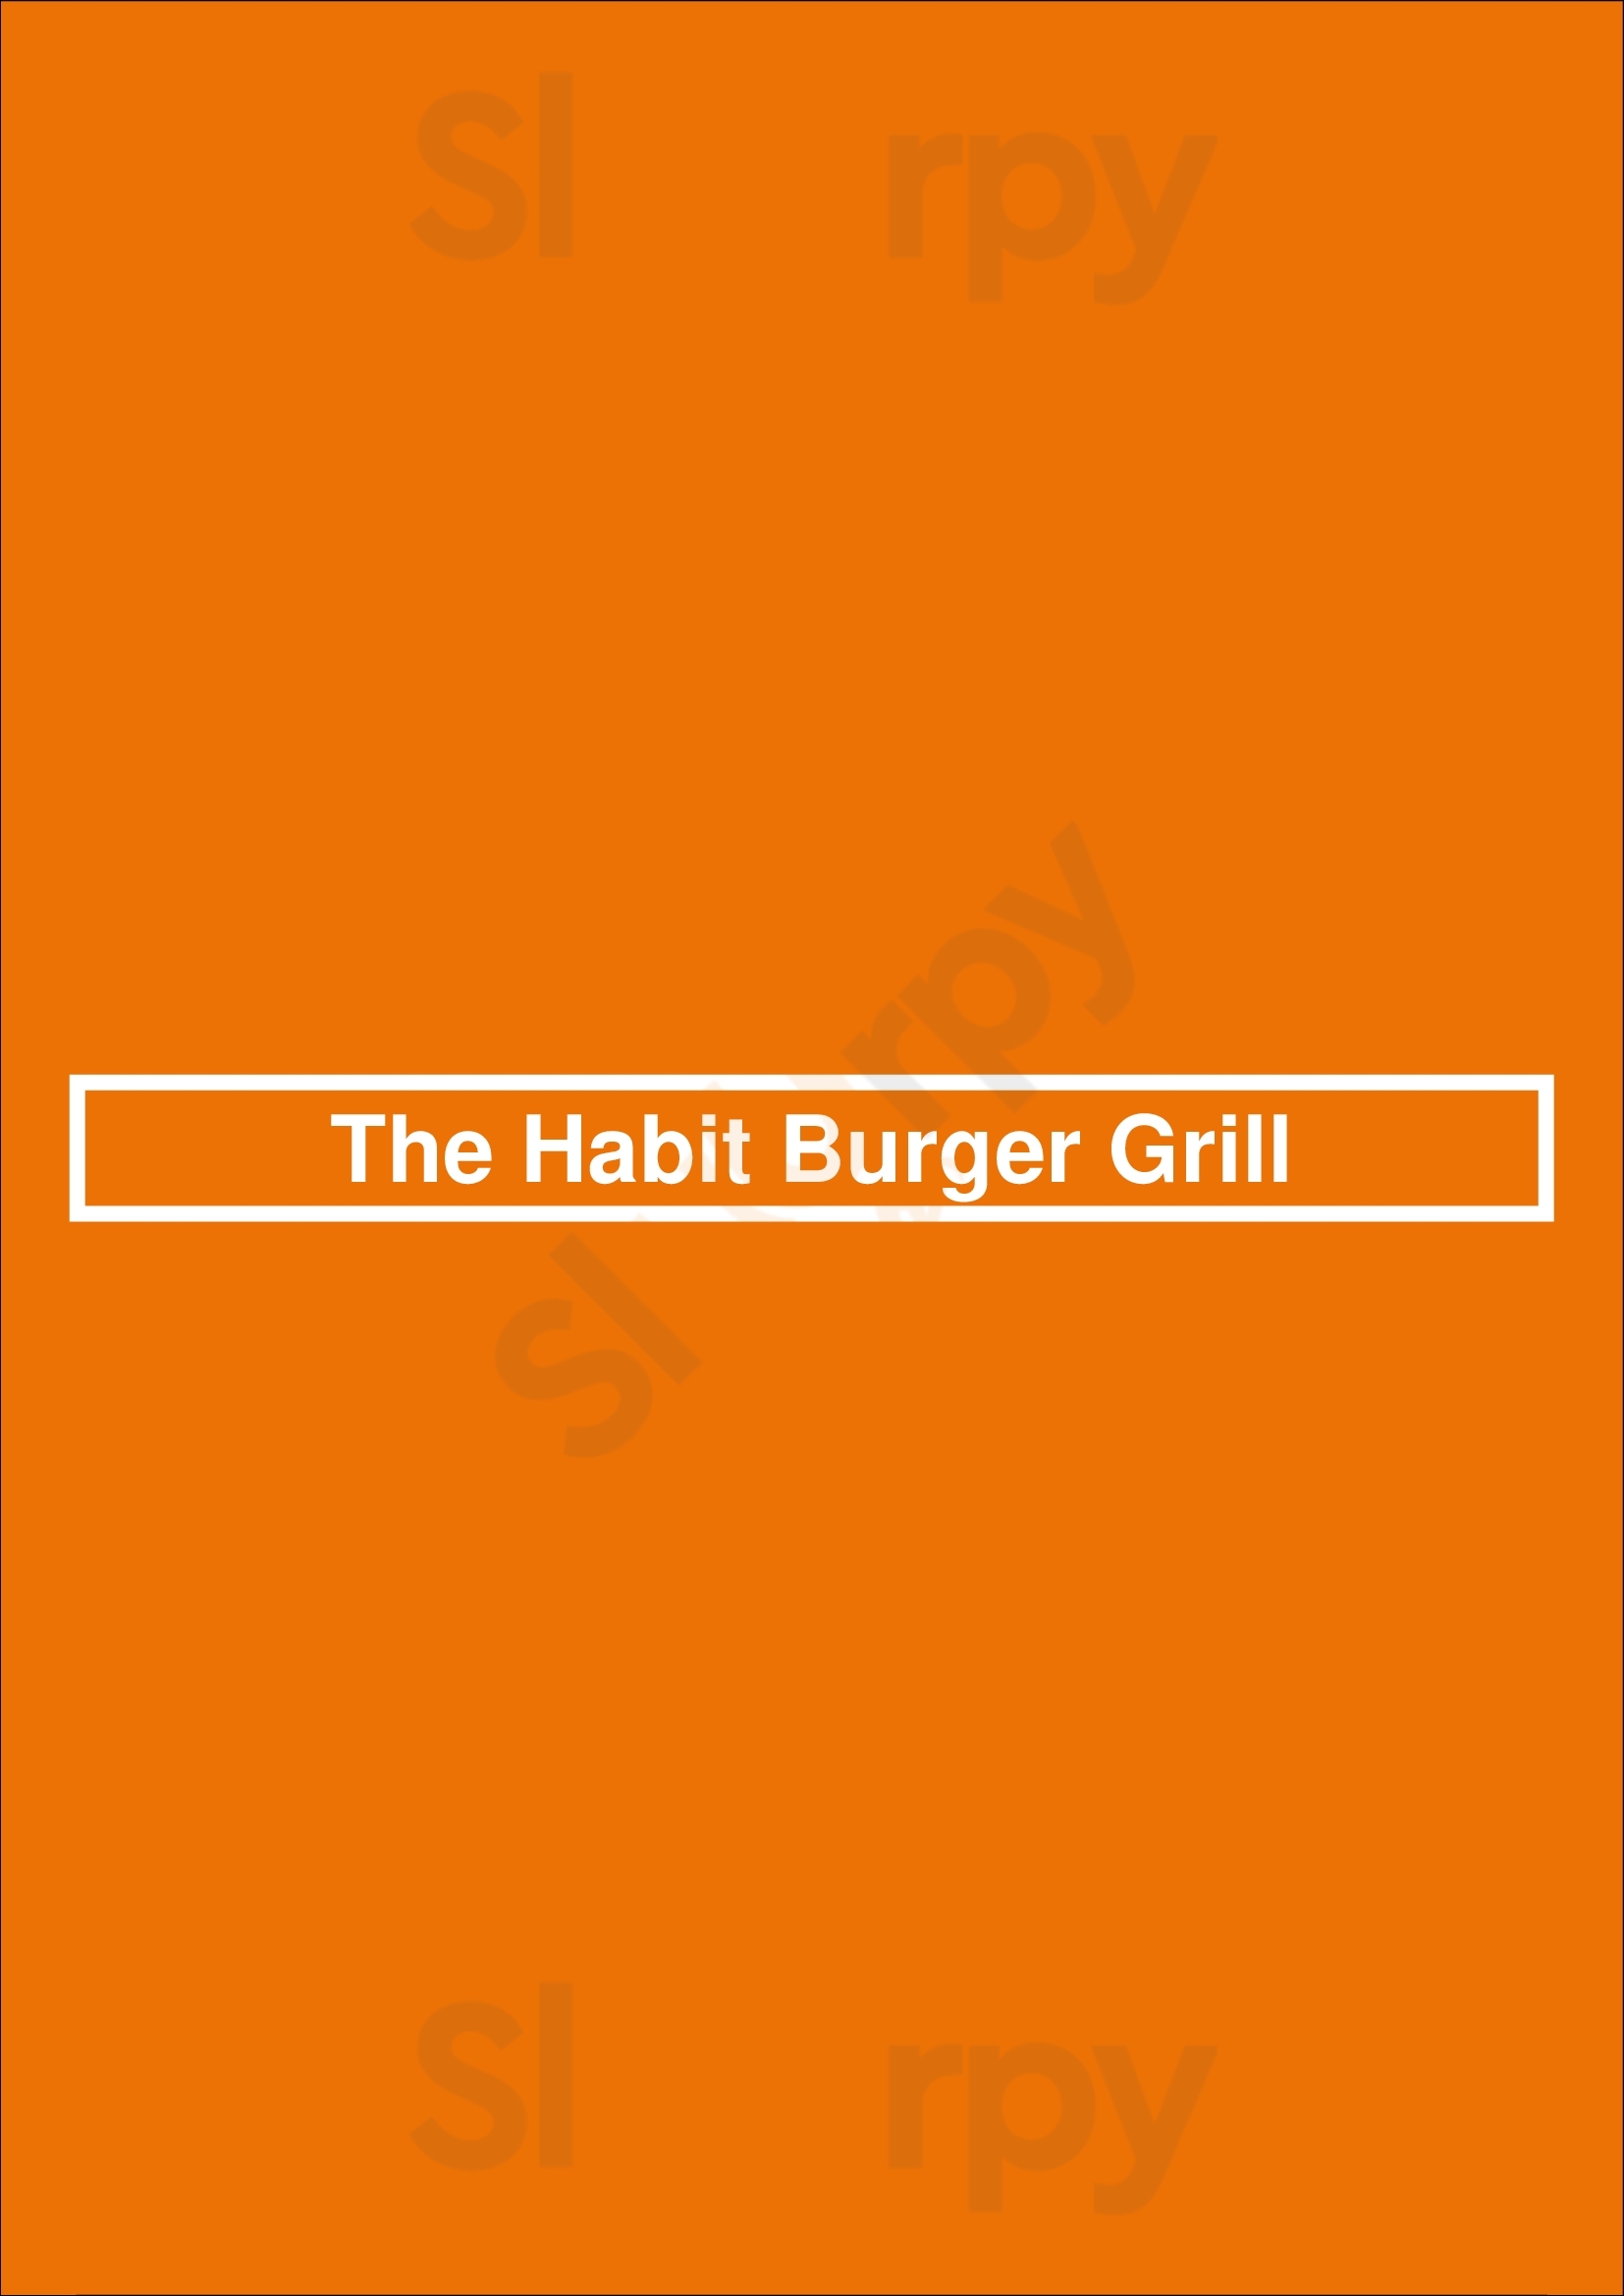 The Habit Burger Grill San Diego Menu - 1